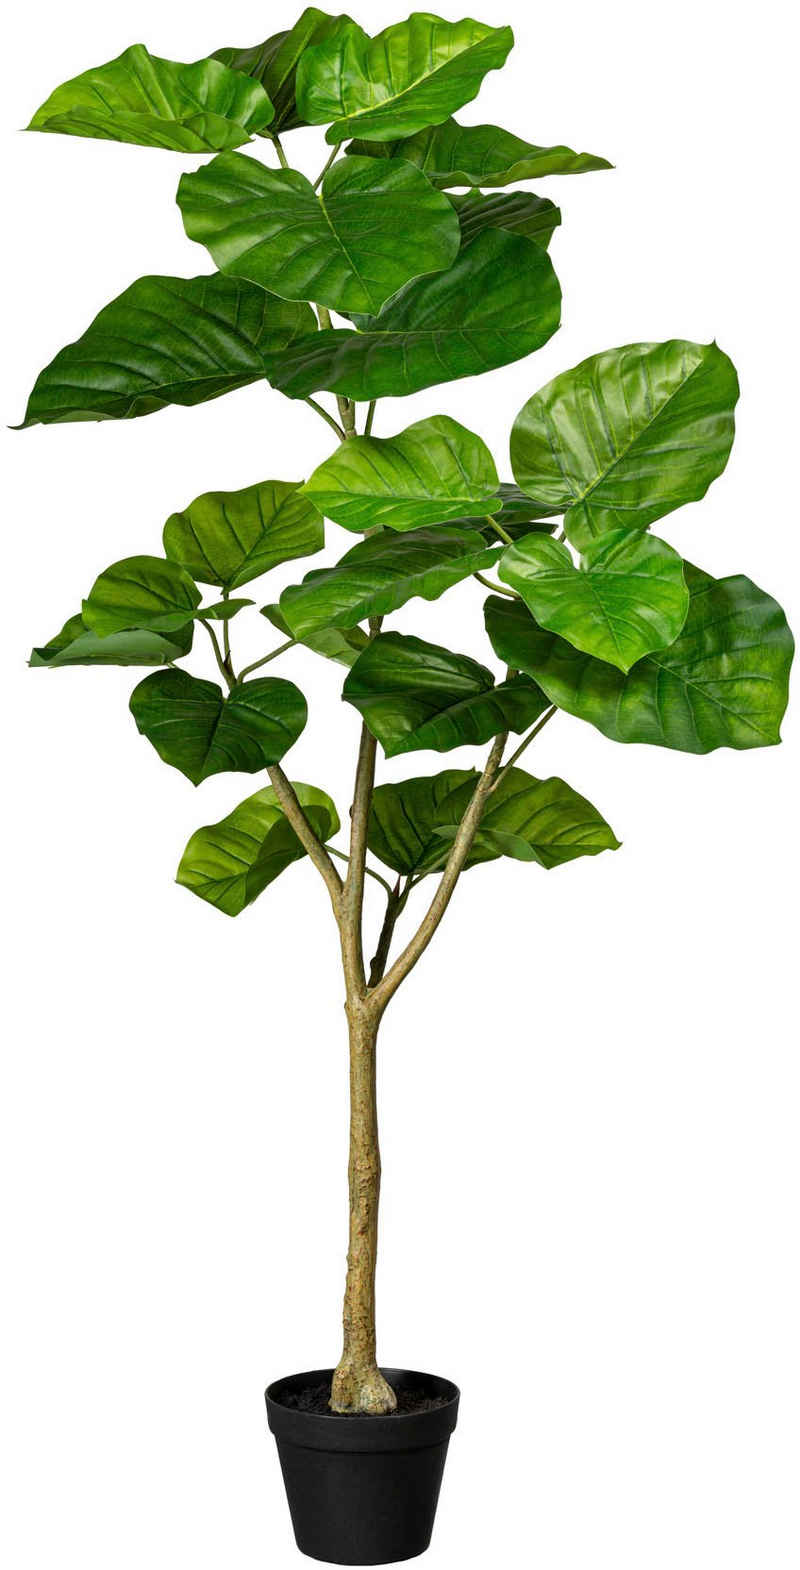 Kunstbaum Ficus umbellata Grünpflanze, Creativ green, Höhe 125 cm